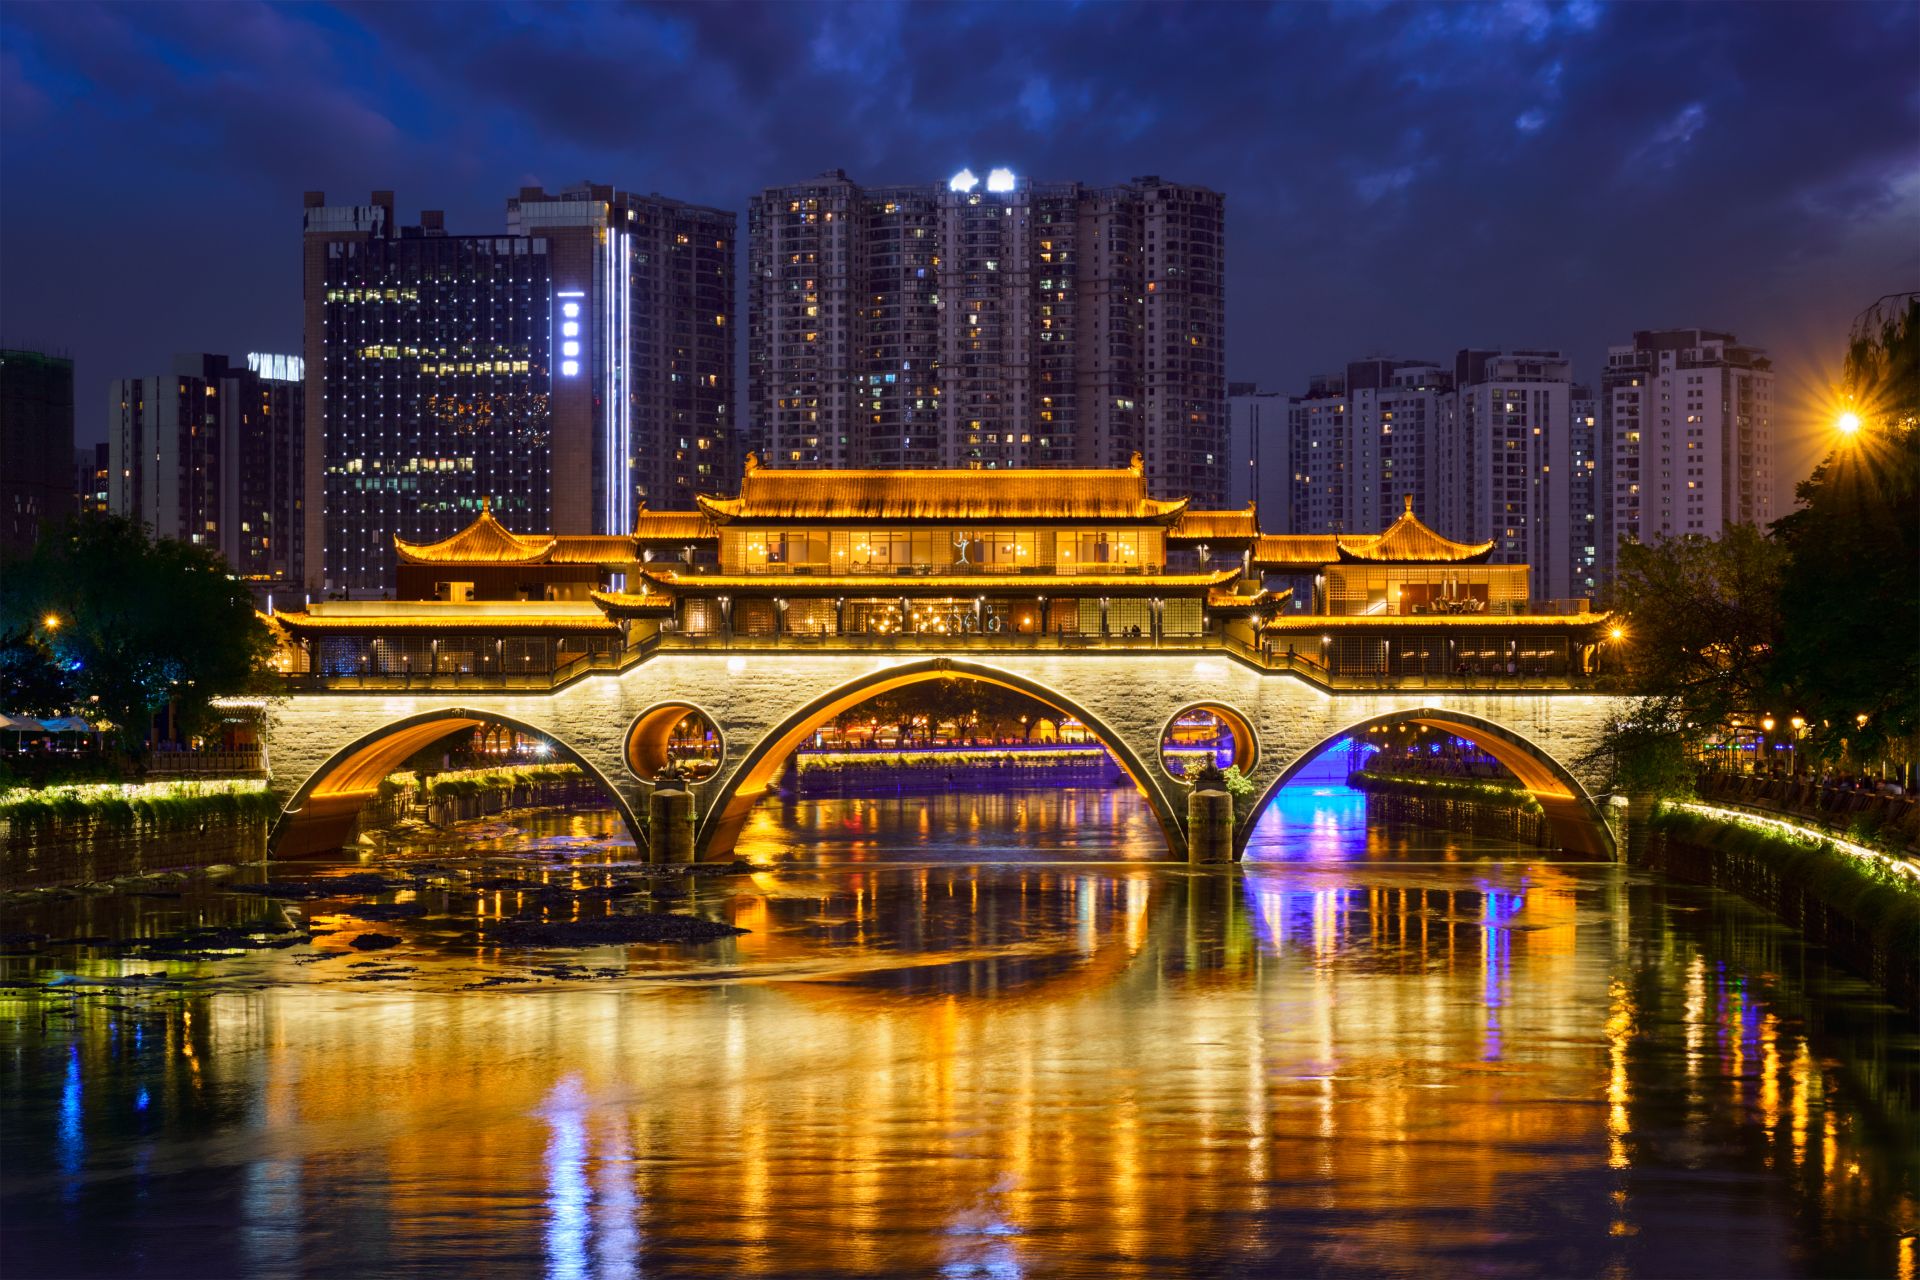 Anshun Bridge over the Jin River illuminated